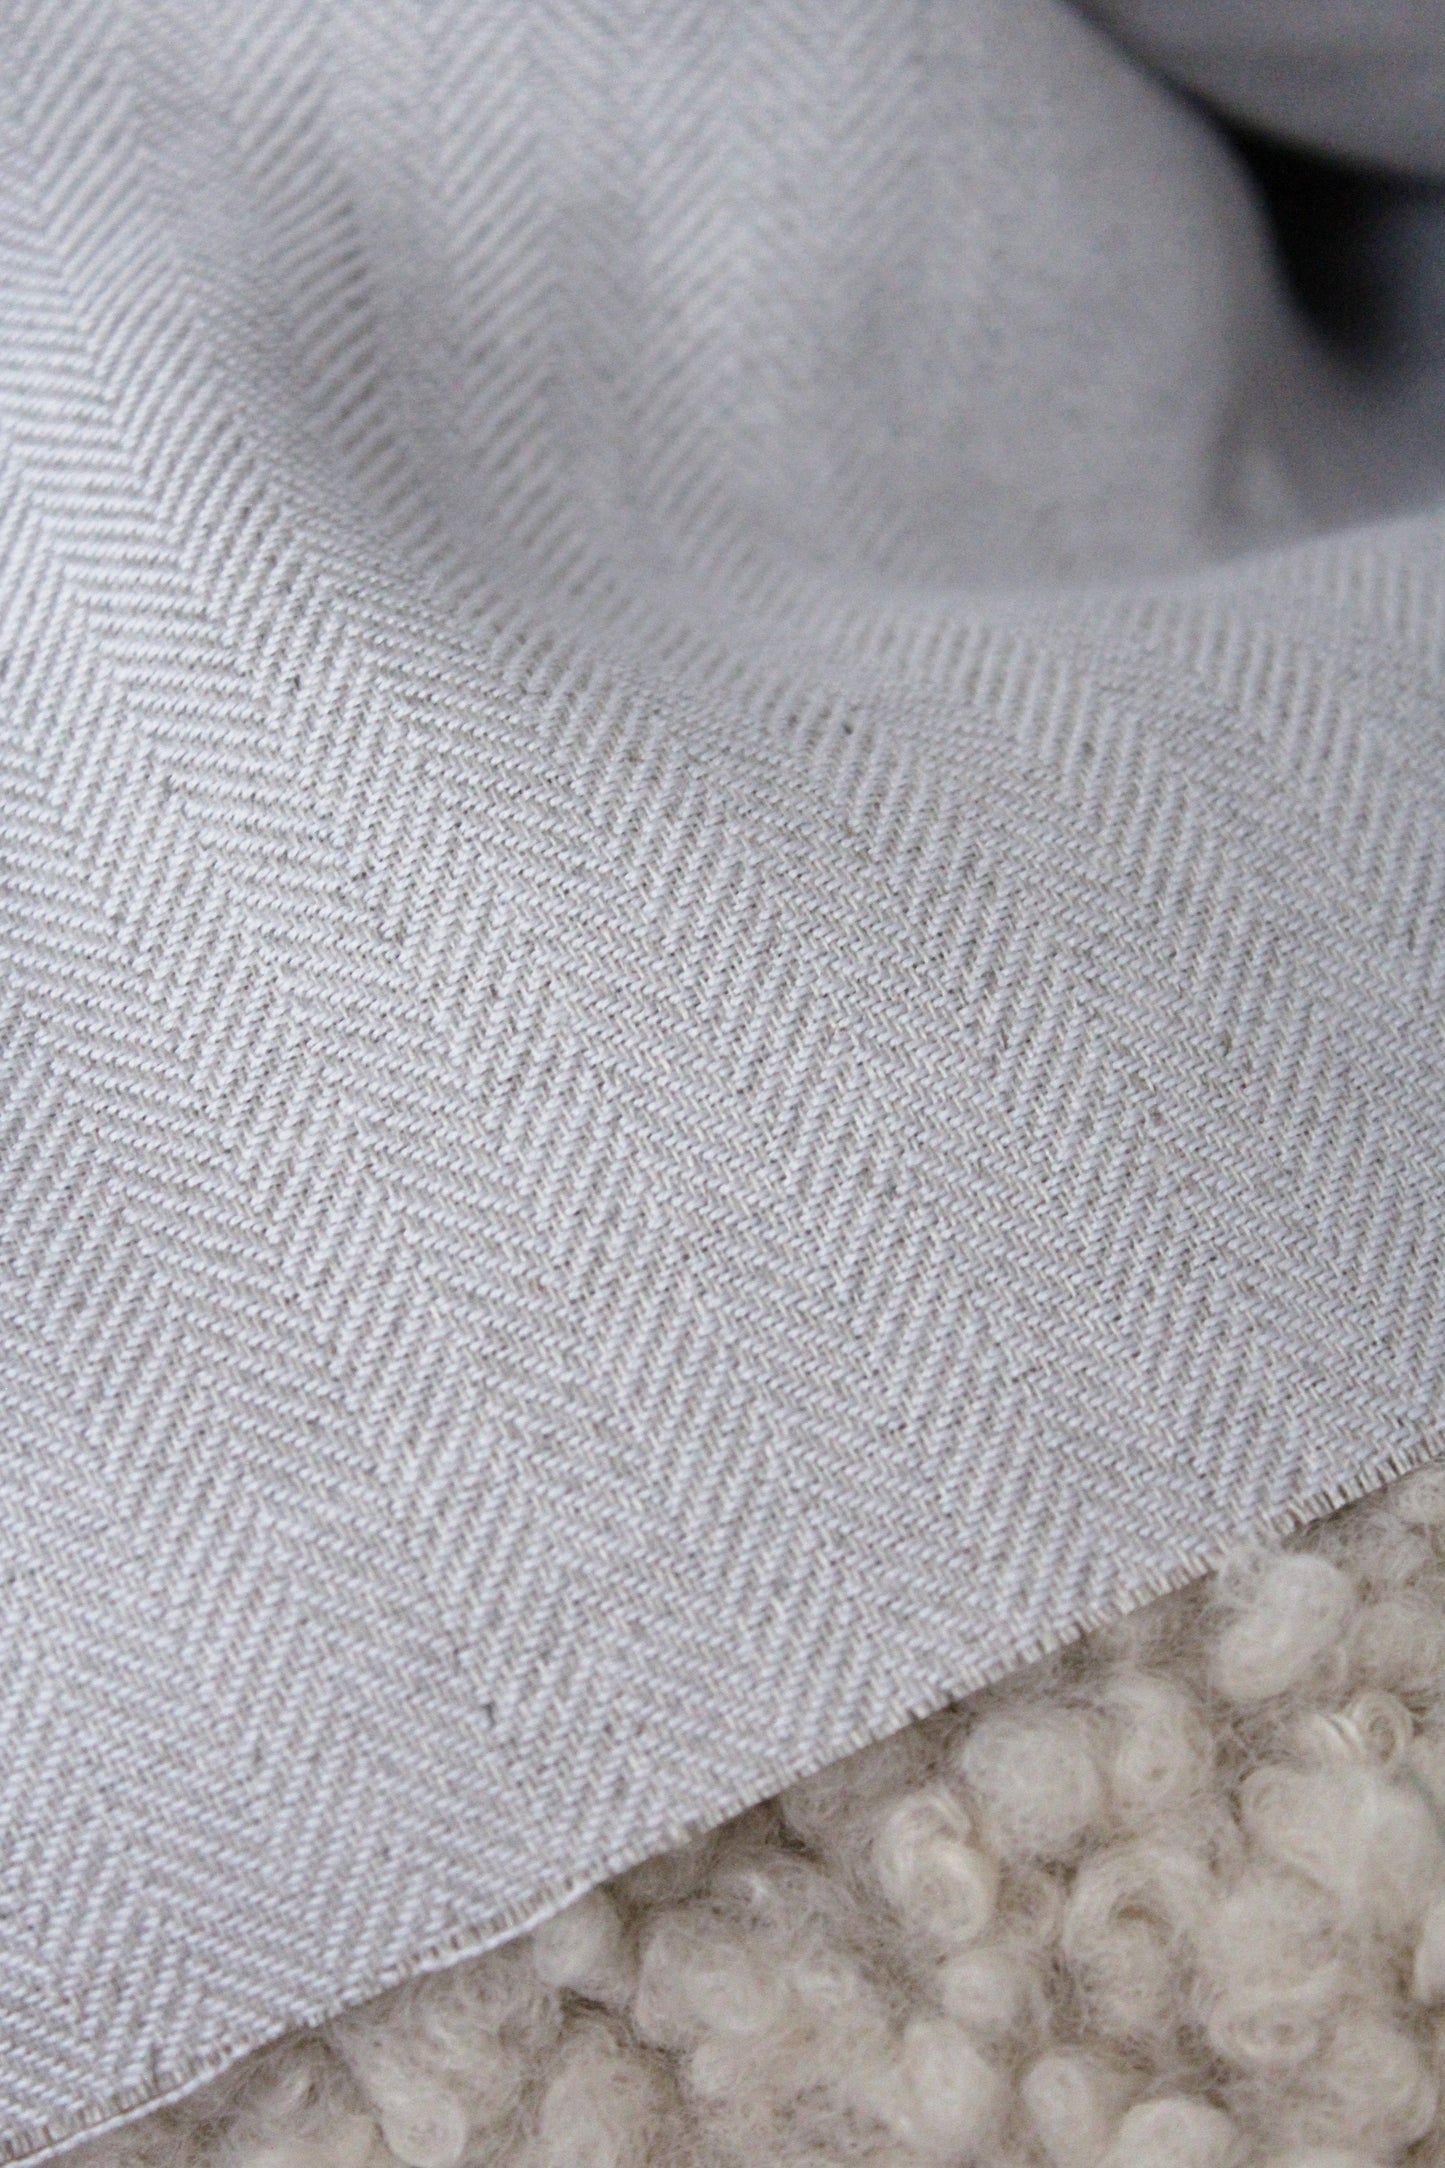 pure natural flax linen, grey with purple undertone, herringbone weave texture, medium weight fabric